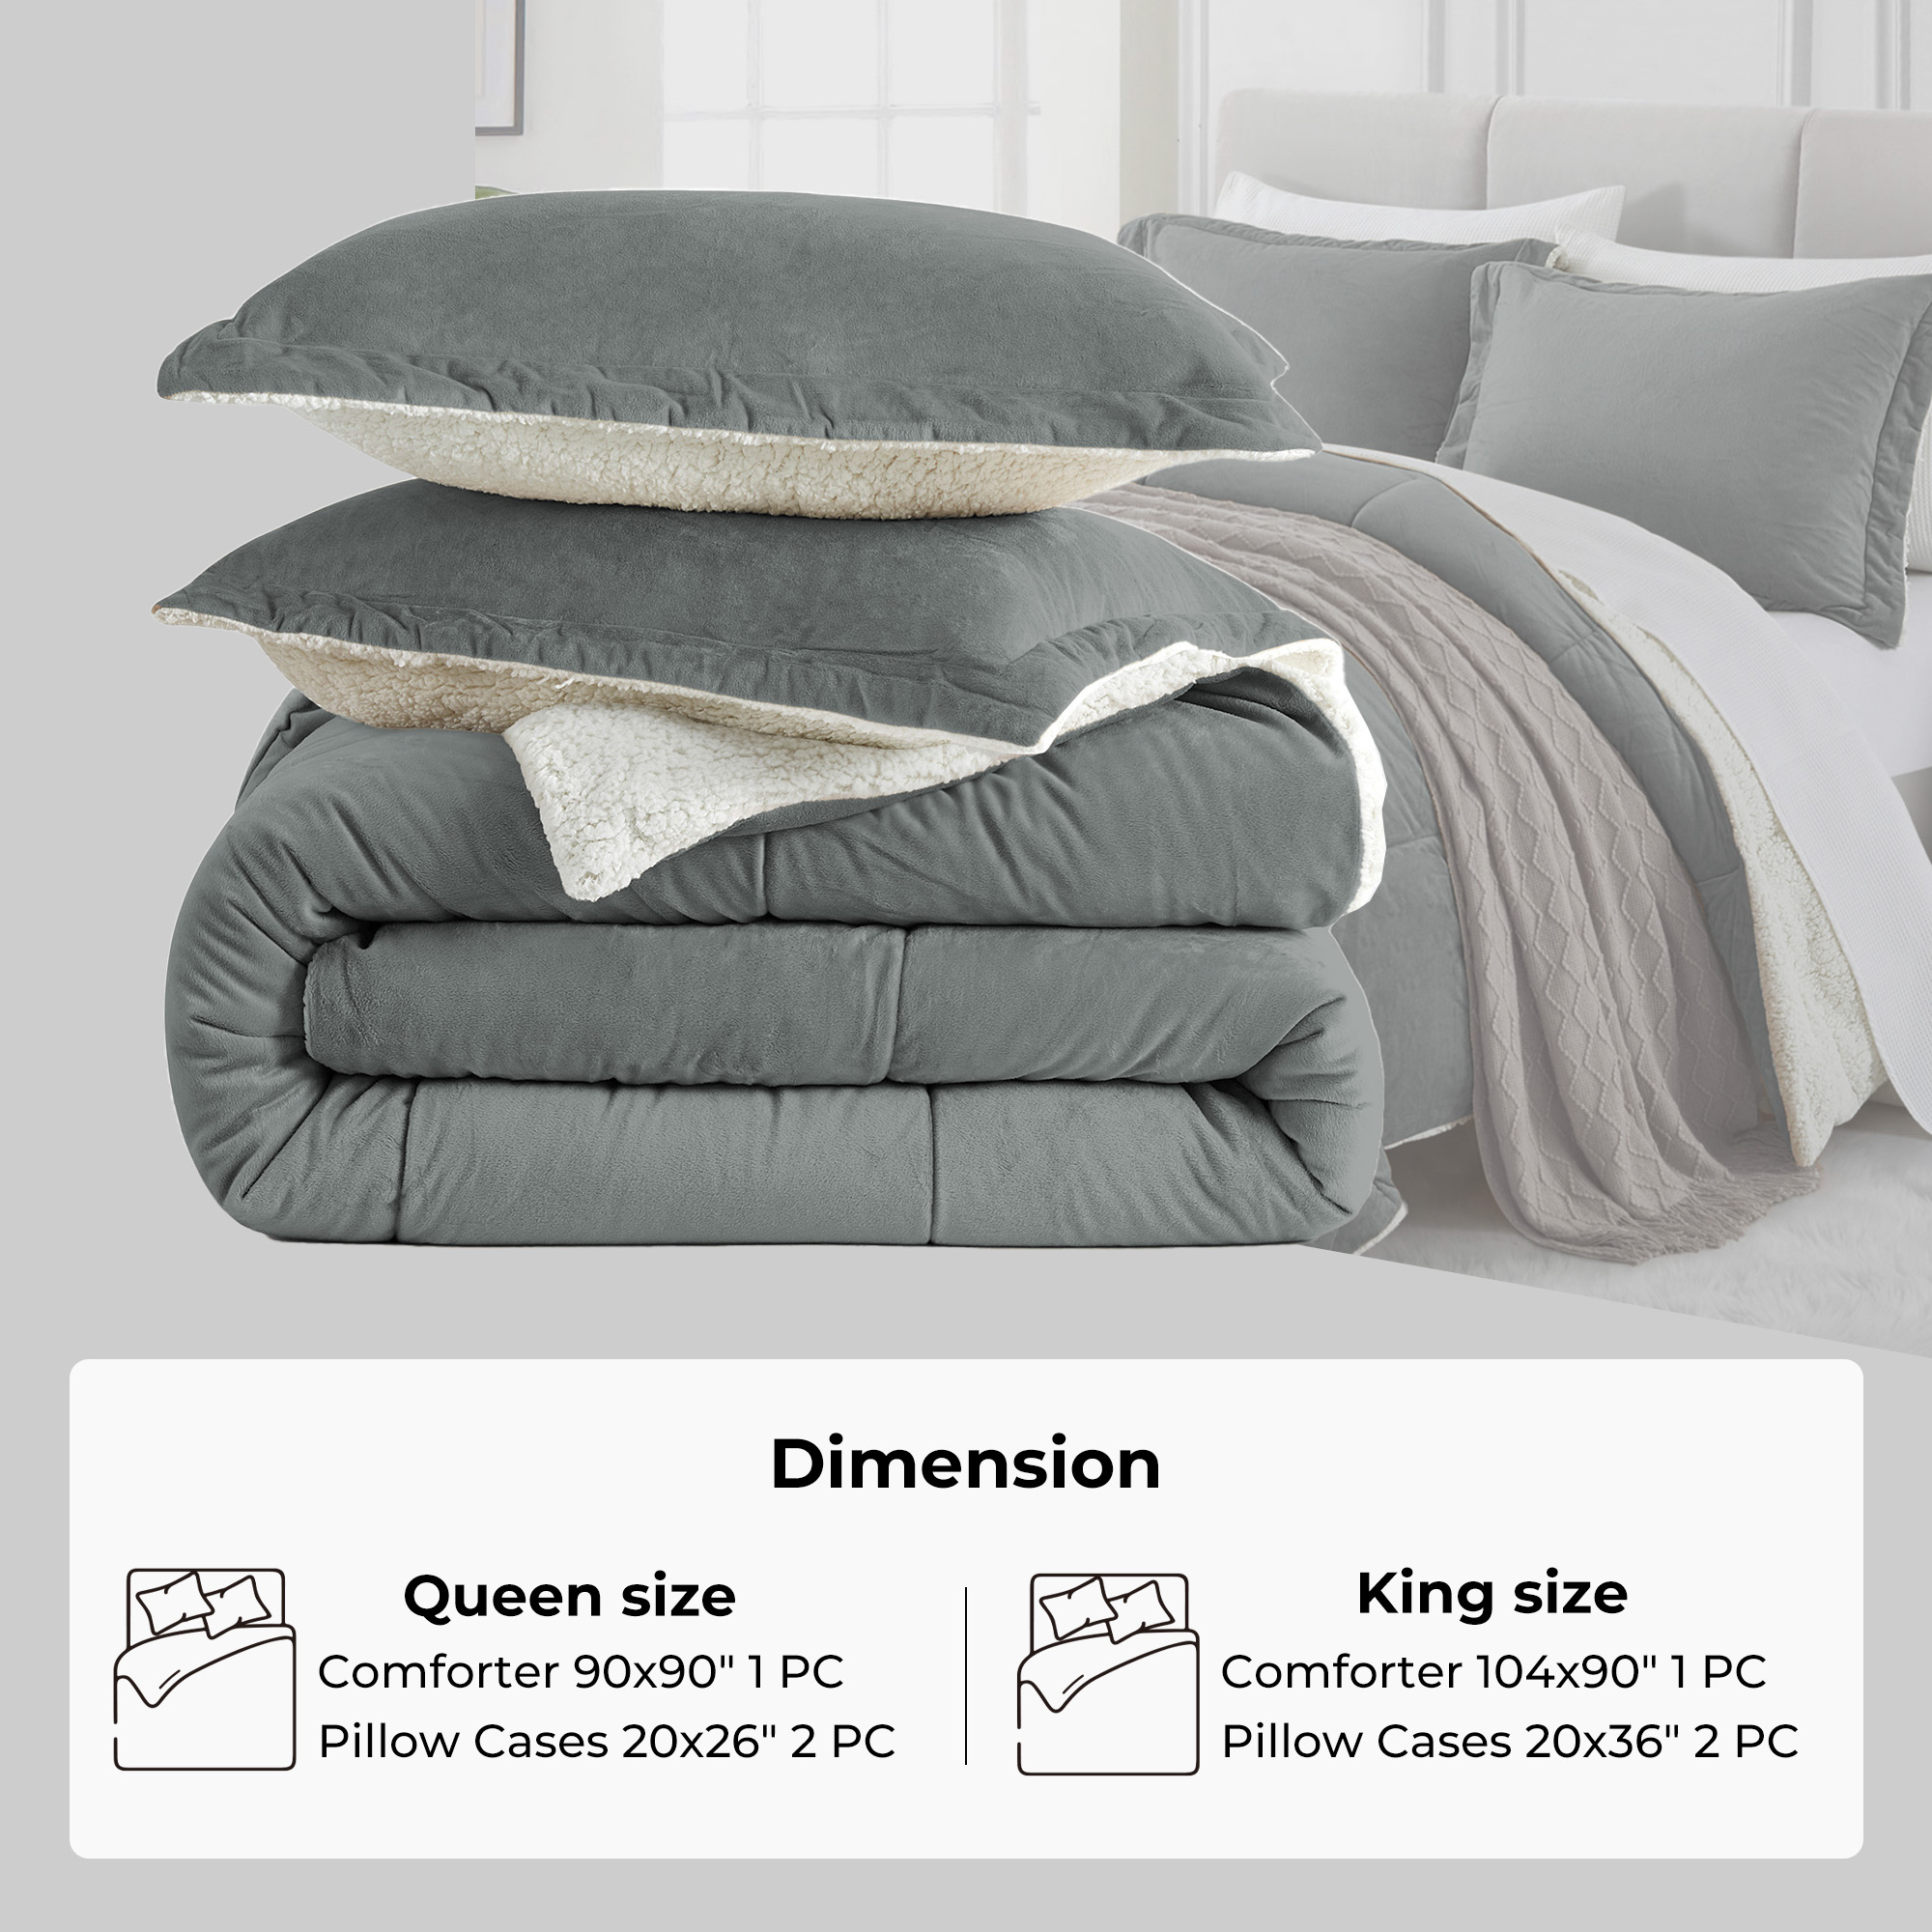 3 Piece All Season Comforter Set With Shams Reversible Faux Shearling-Down Alternative Comforter Set - Dark Gray, Queen Size-9090